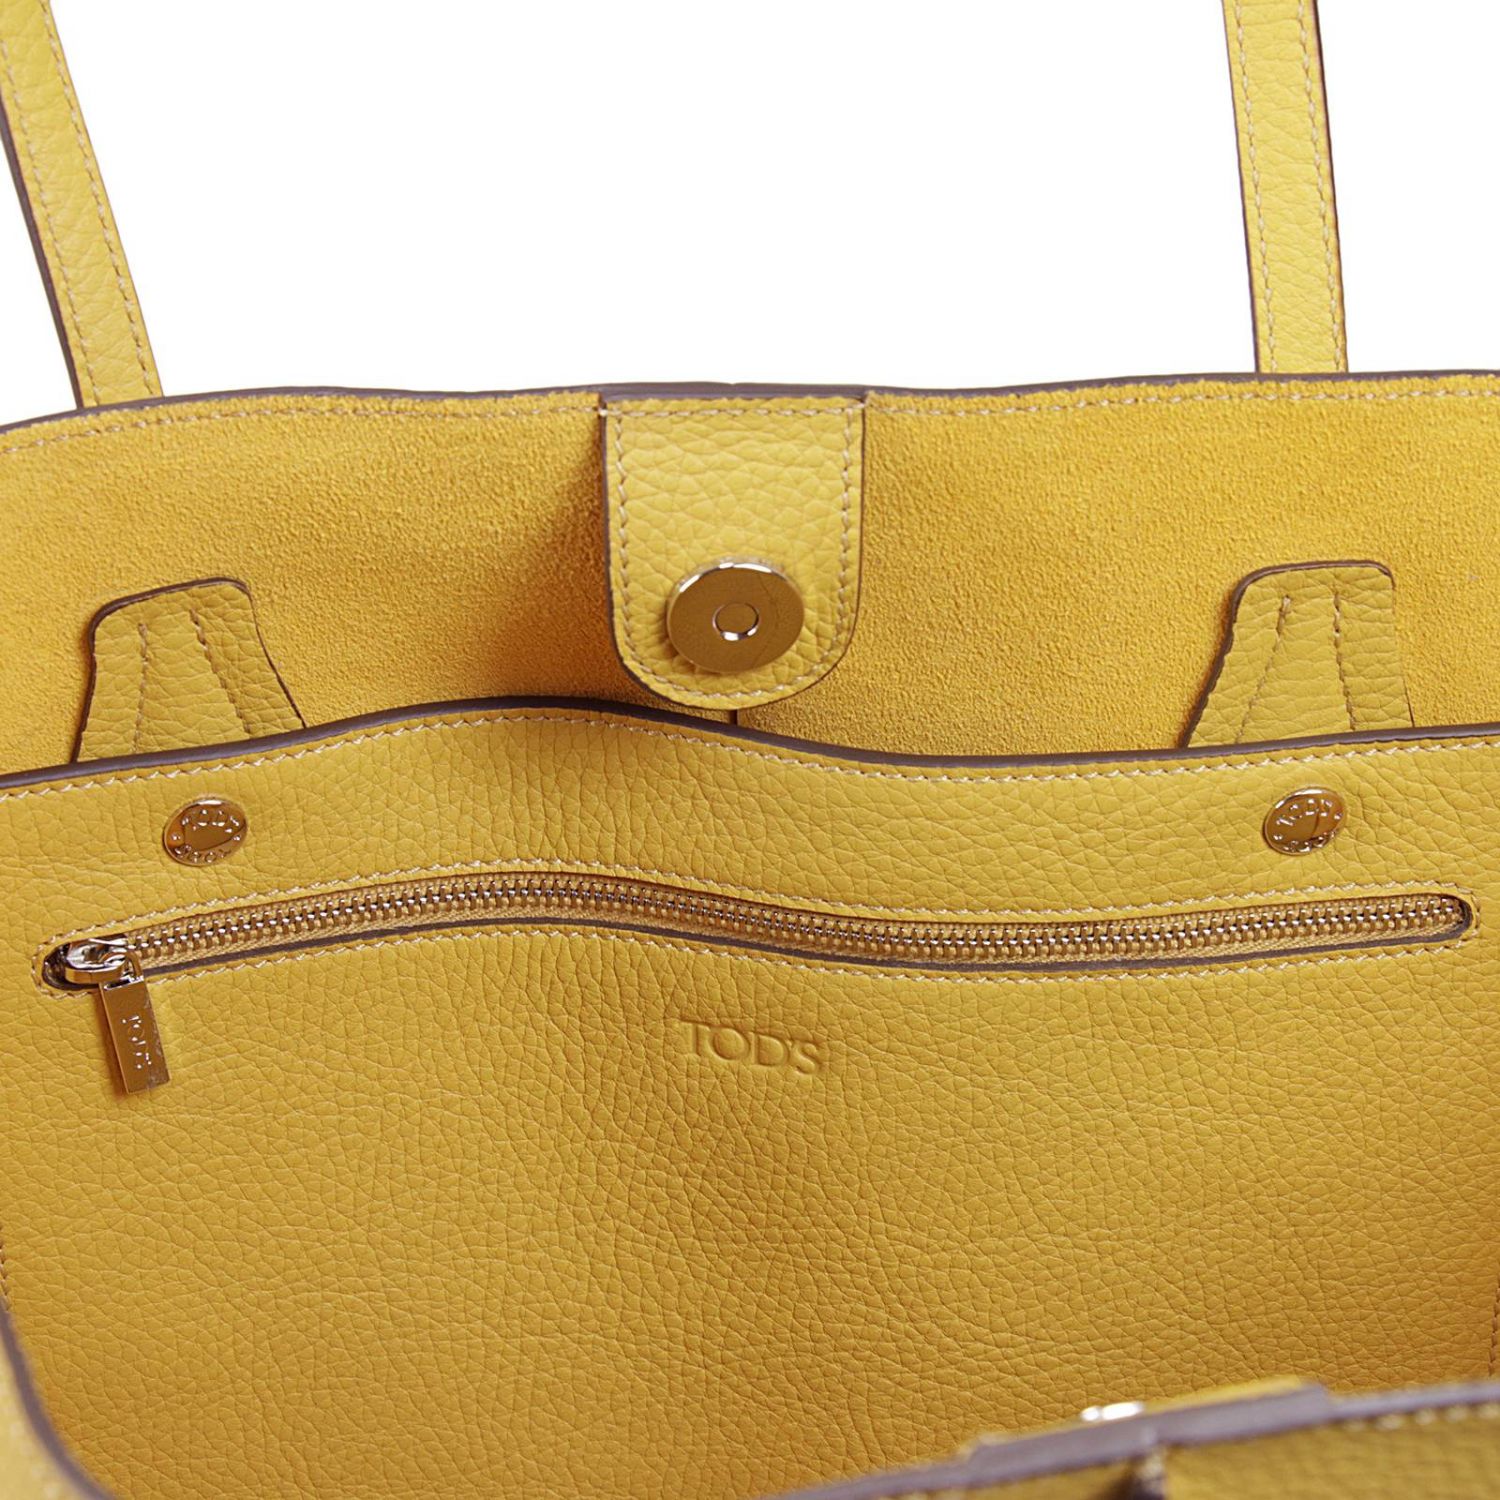 TODS: | Shoulder Bag Tods Women Yellow | Shoulder Bag Tods xbwamfav300 ...